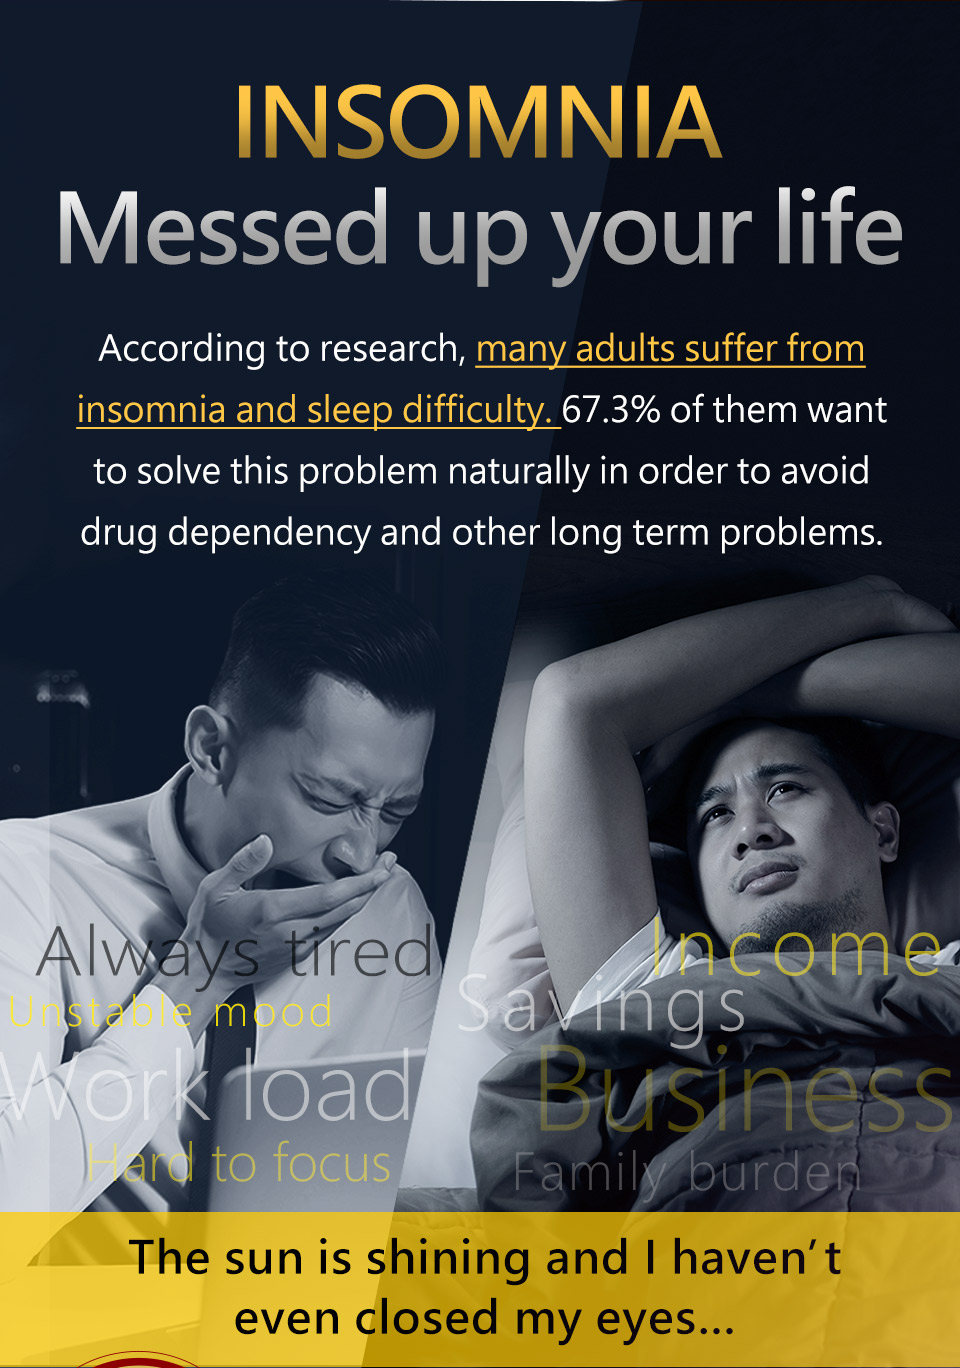 Sesamin improves sleep quality and promotes deep sleep